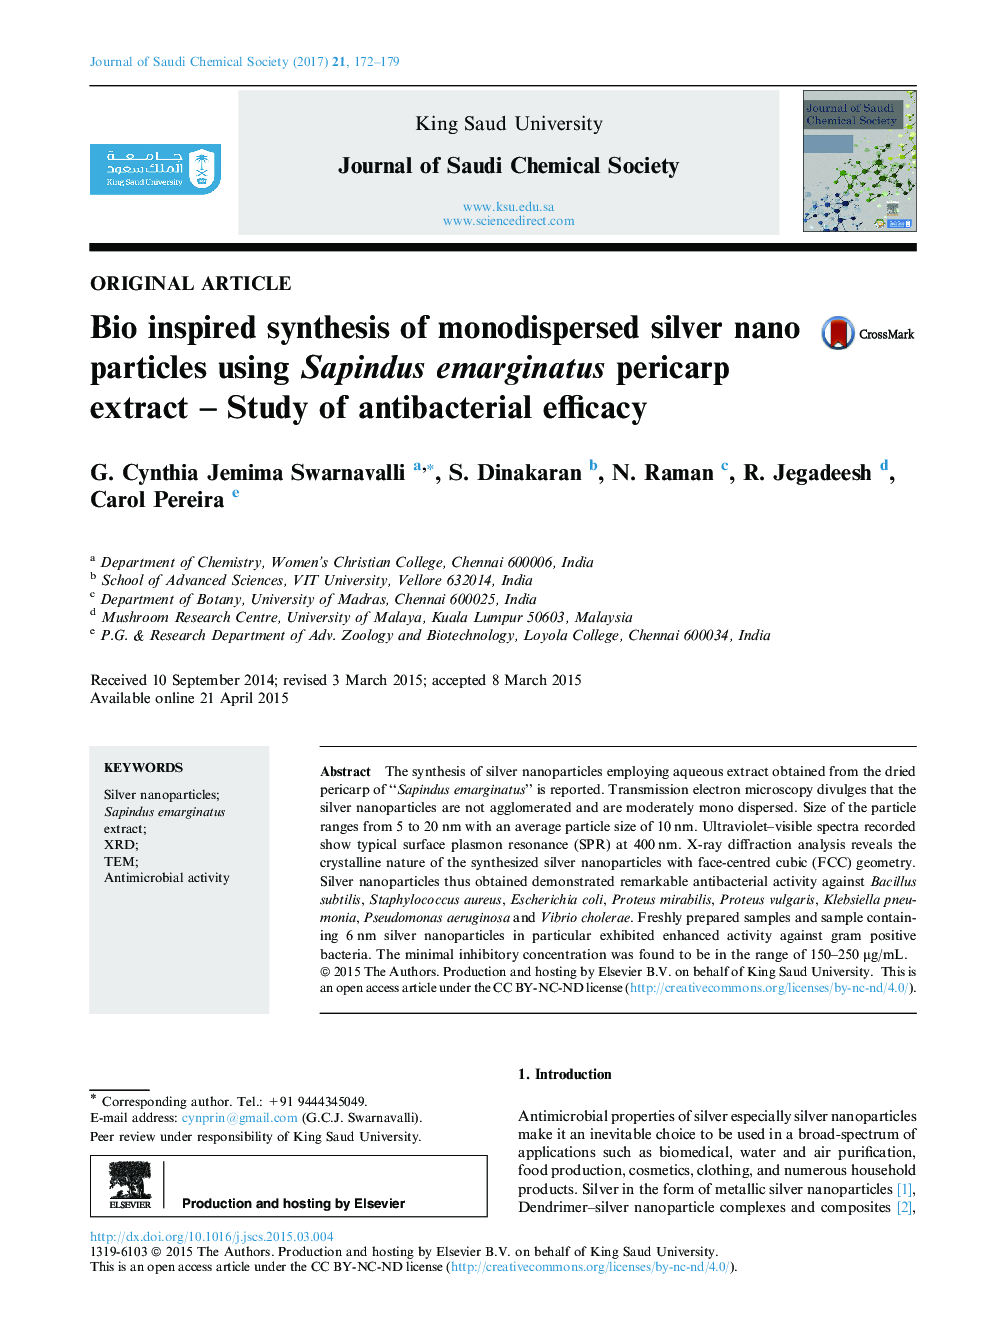 Bio inspired synthesis of monodispersed silver nano particles using Sapindus emarginatus pericarp extract - Study of antibacterial efficacy